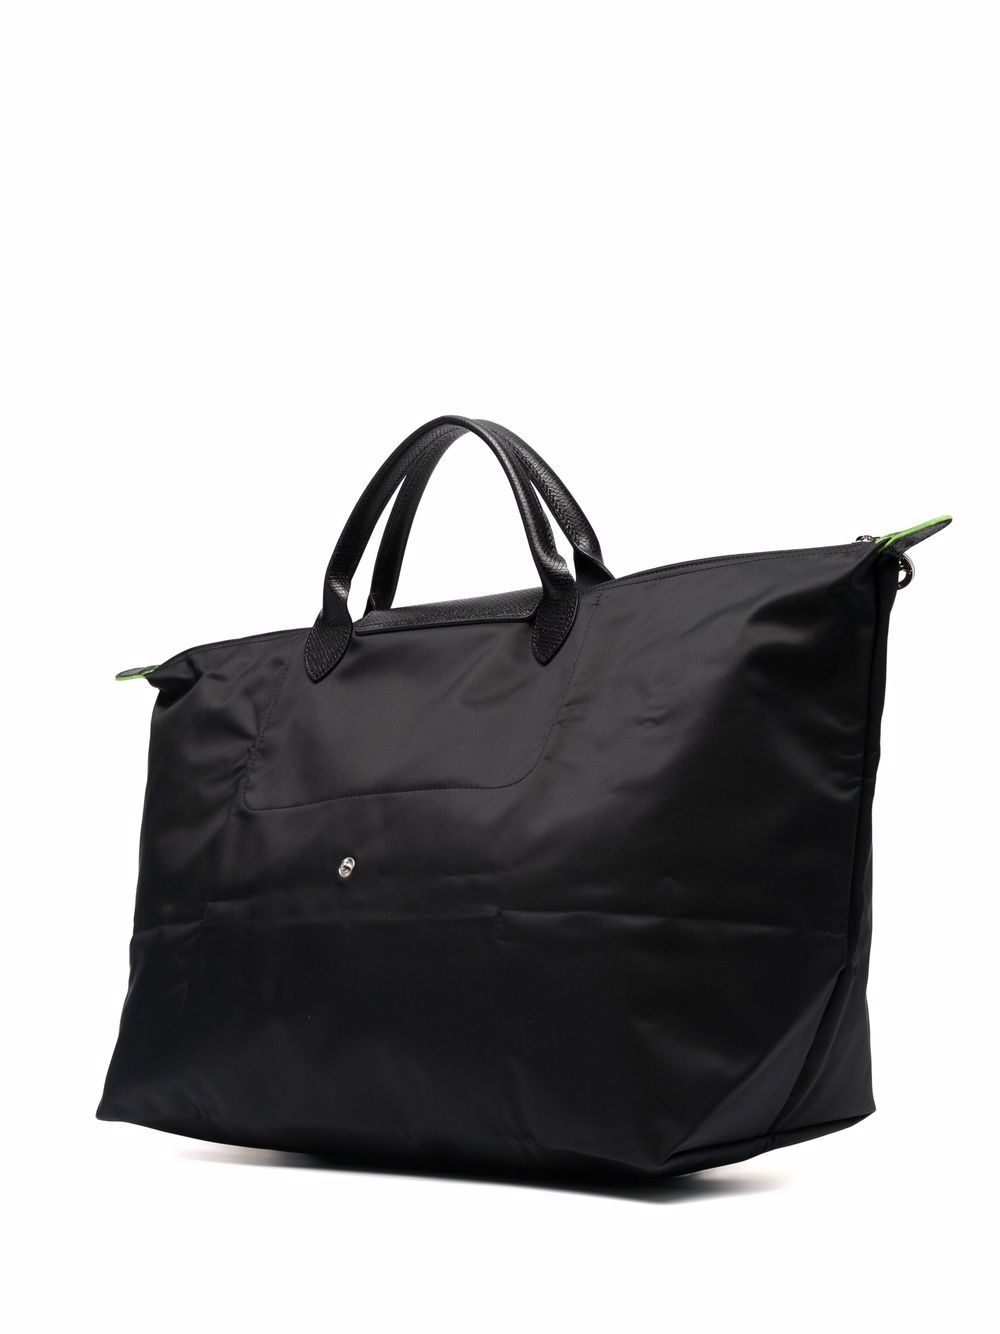 Longchamp Large Le Pliage Travel Bag